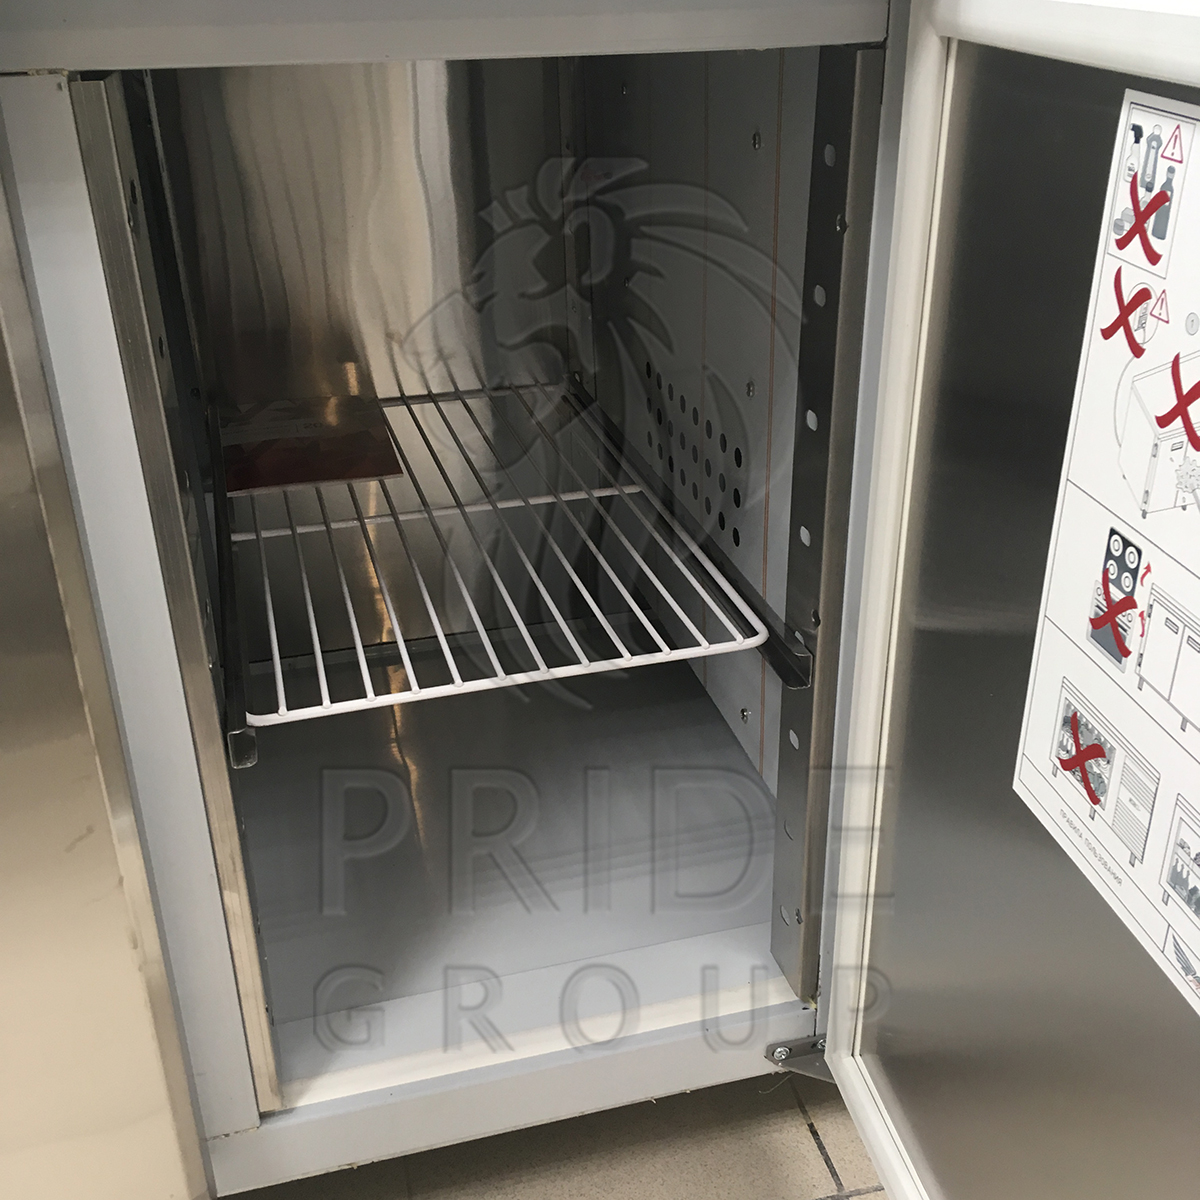 картинка Стол холодильный Finist КХС-700-2/1 комбинированный 1960х700х850 мм